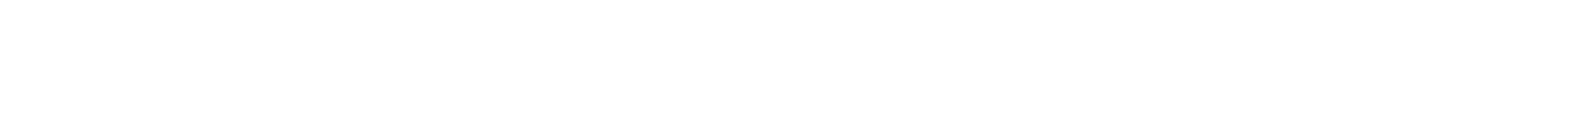 Regis Corporation
 Logo groß für dunkle Hintergründe (transparentes PNG)